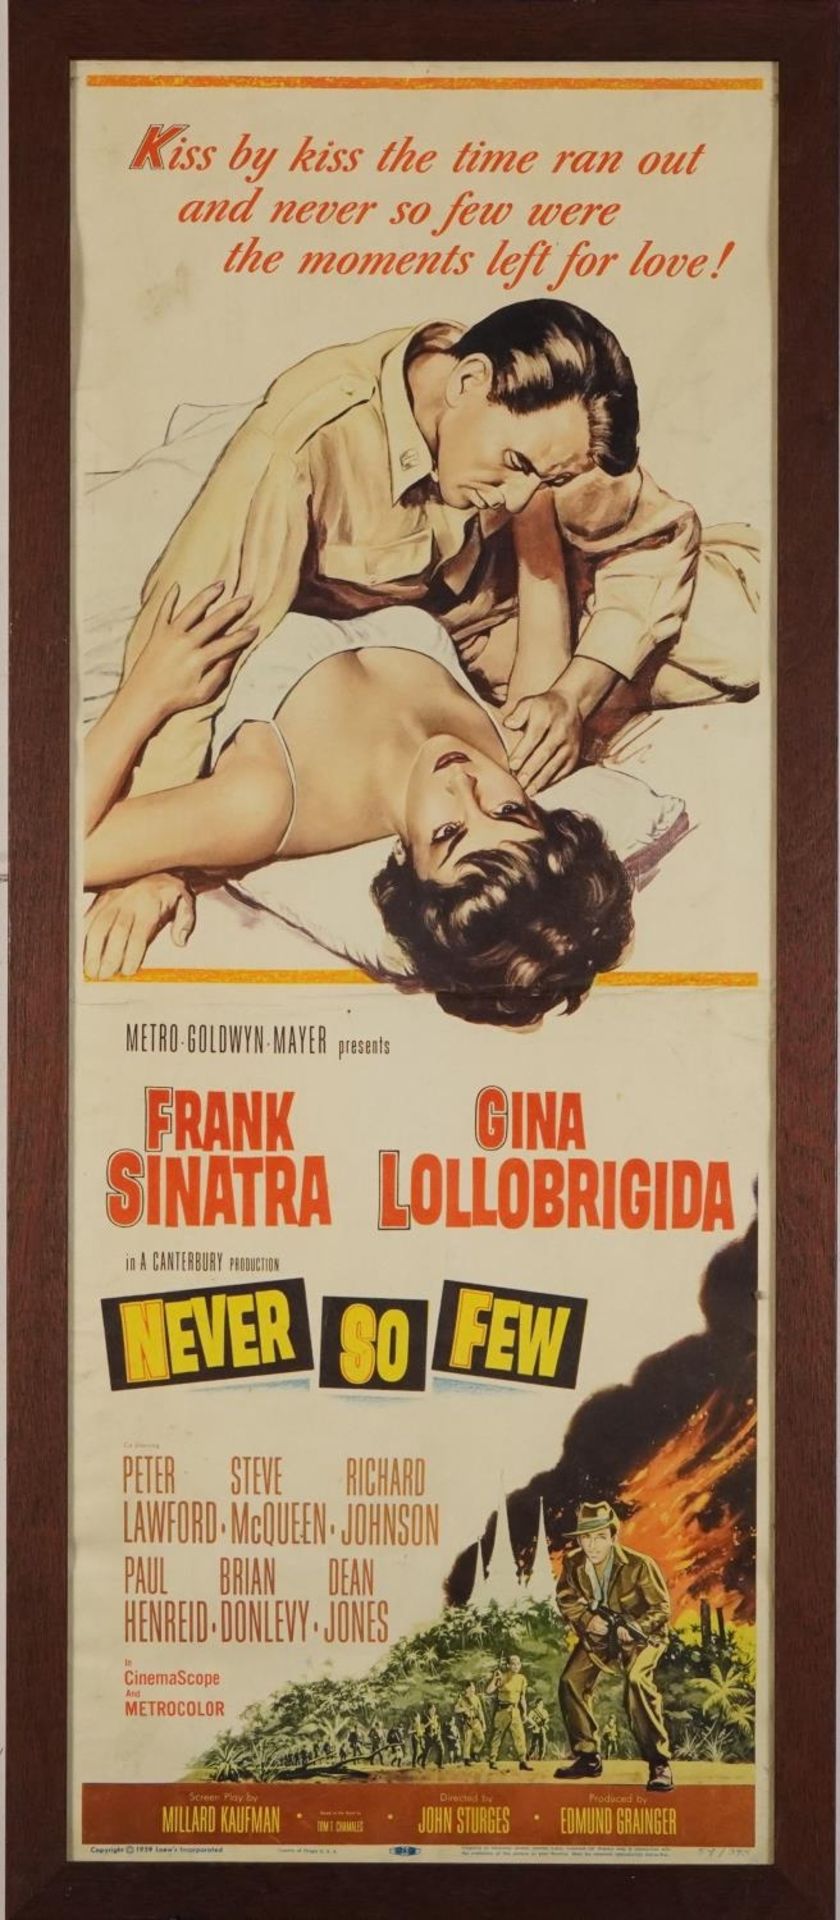 Frank Sinatra and Gina Lollobrigida Never So Few film poster, copyright 1959 Loews Incorporated, - Image 2 of 4